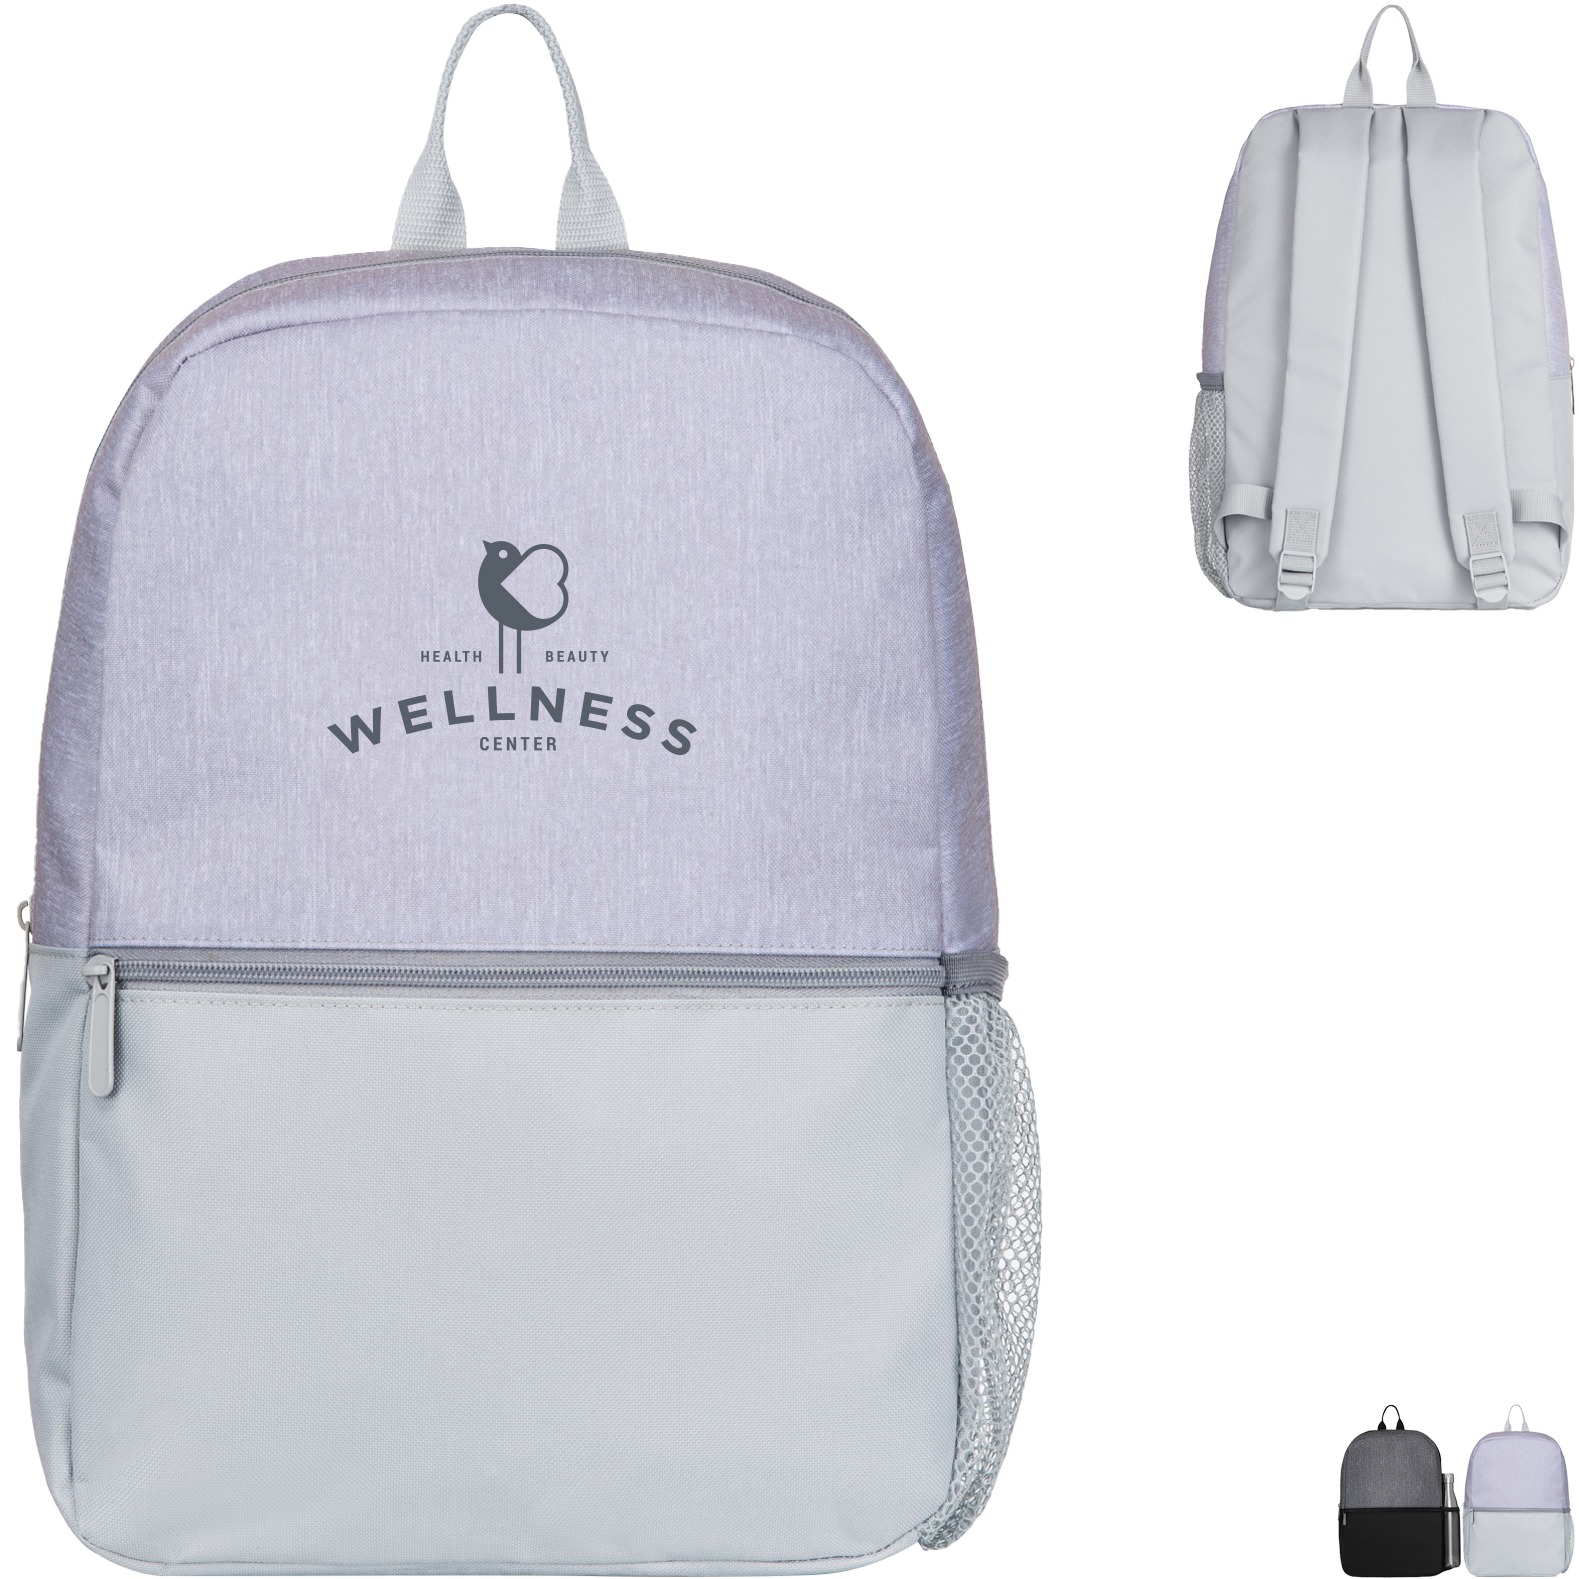 Phantom Backpack with Logo - Progress Promotional Products